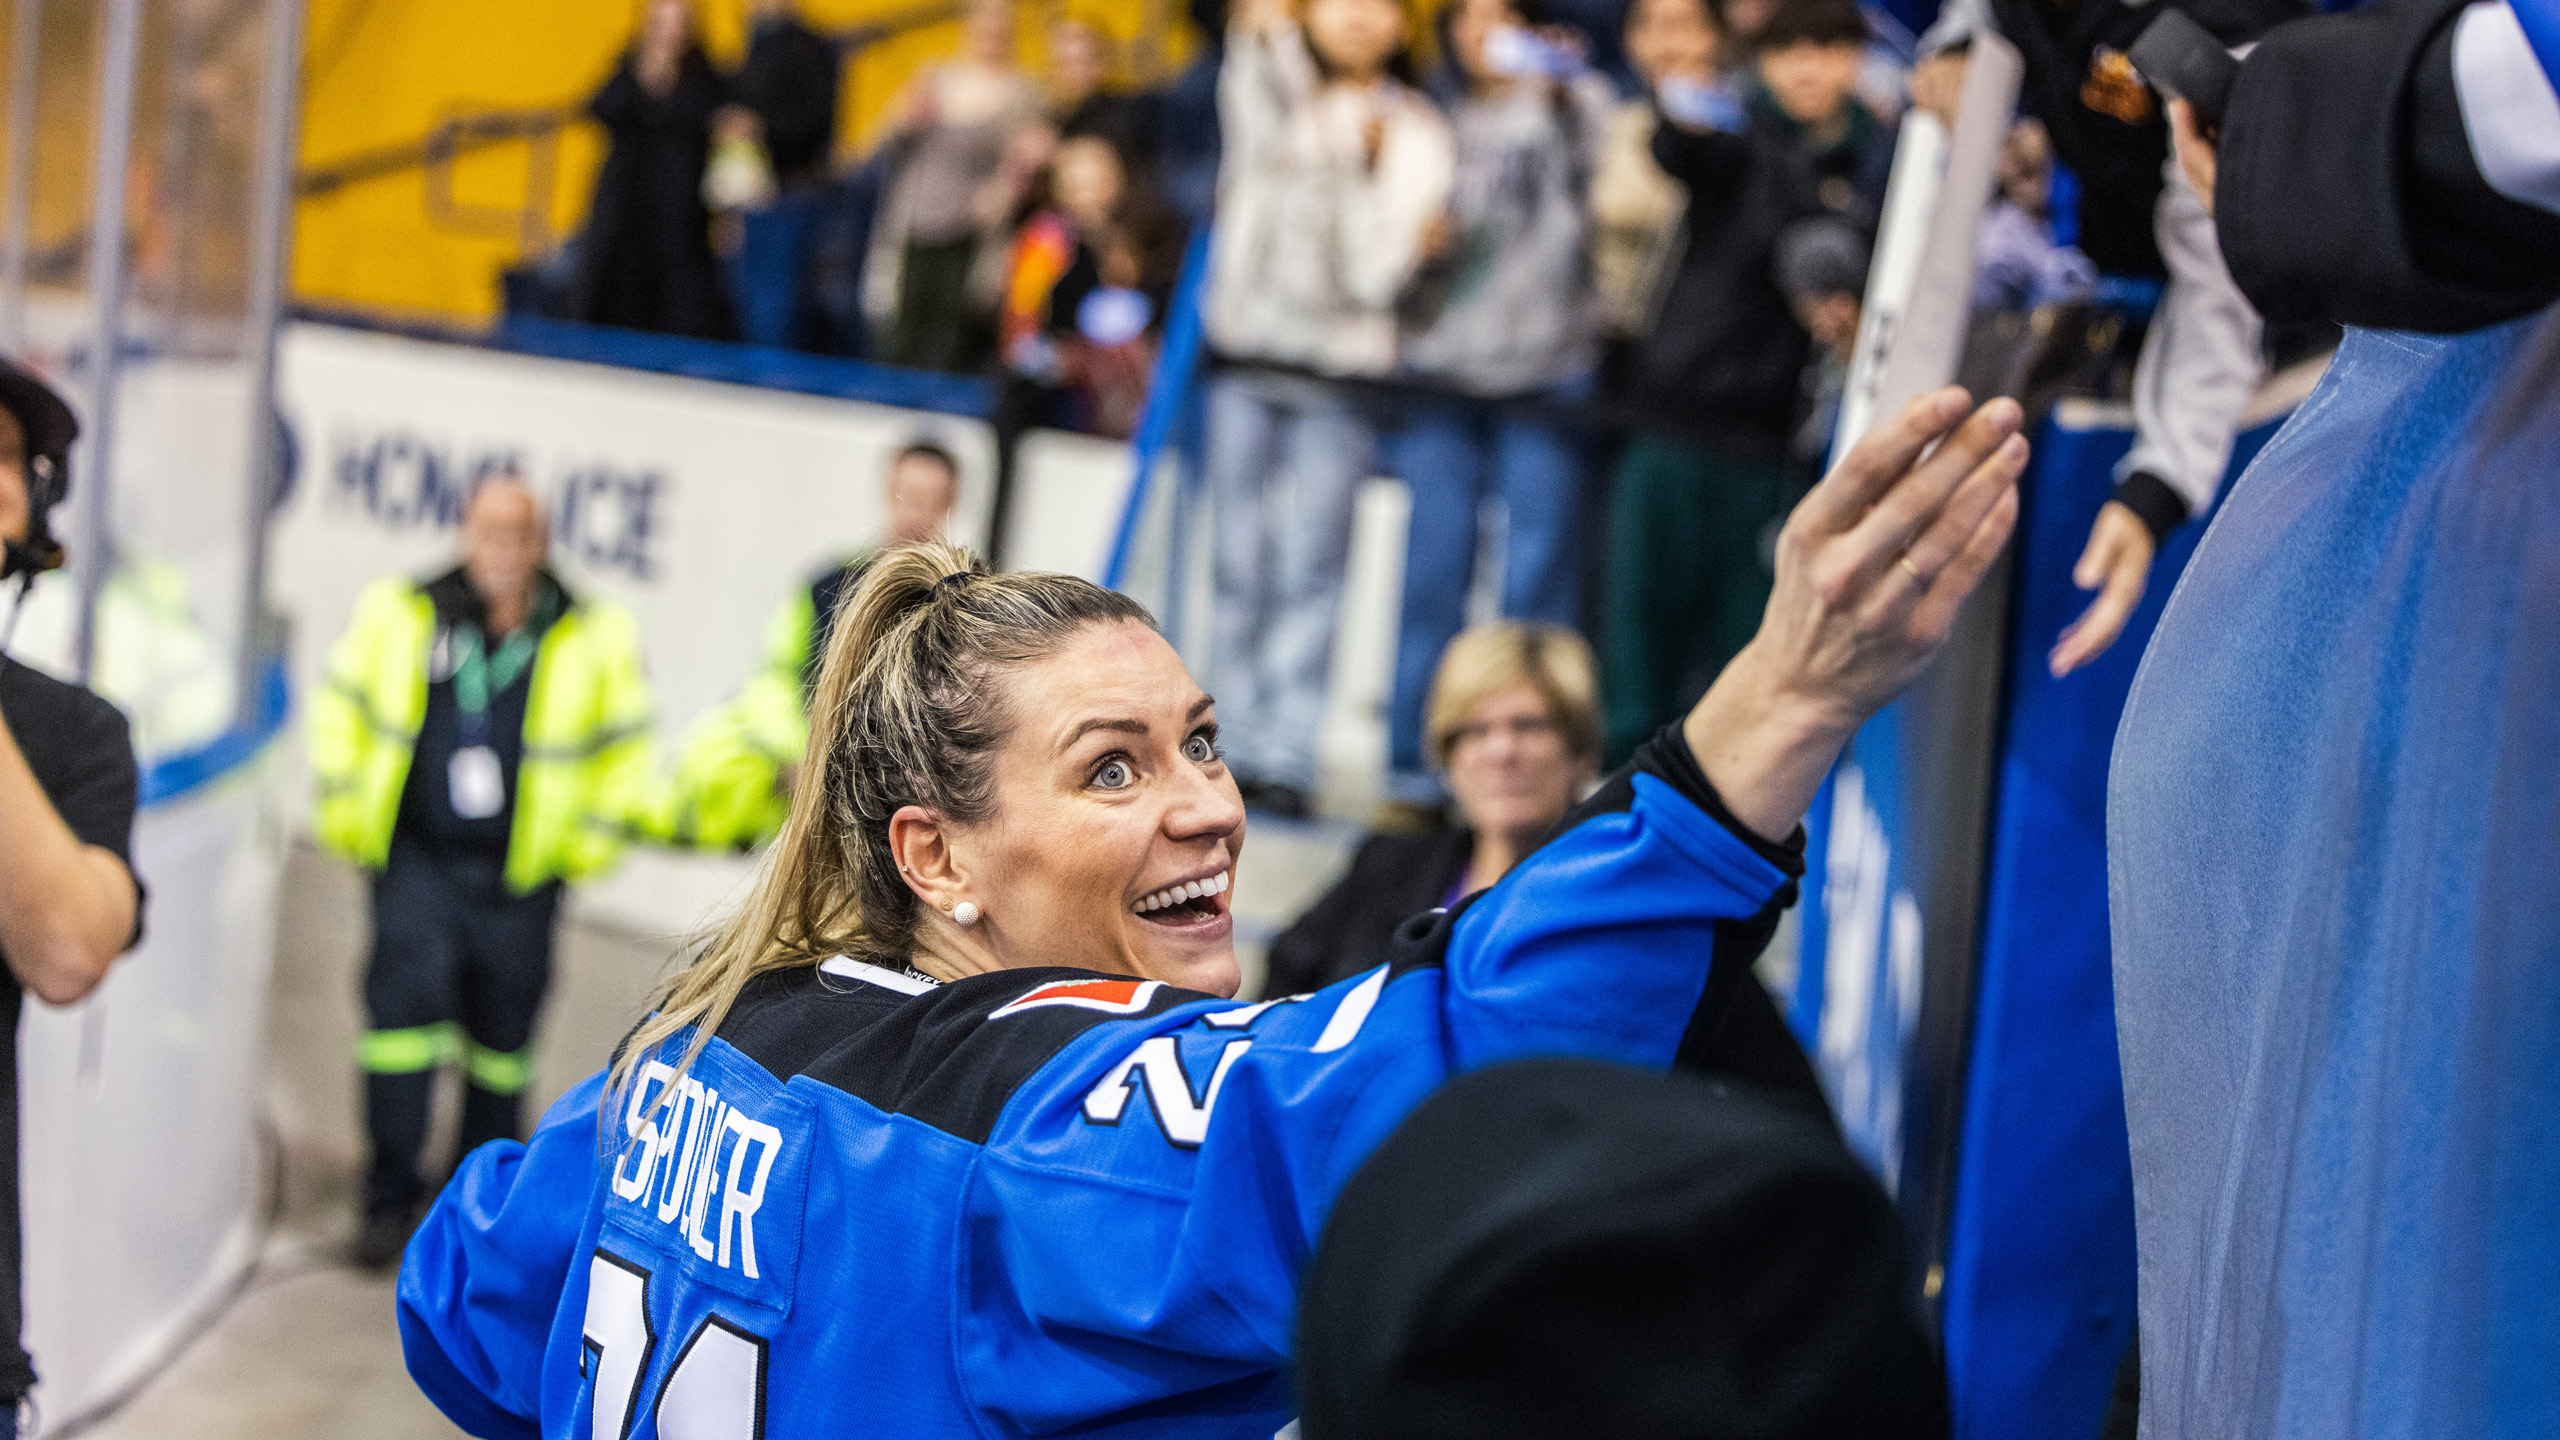 PWHL Toronto player Natalie Spooner high fives fans